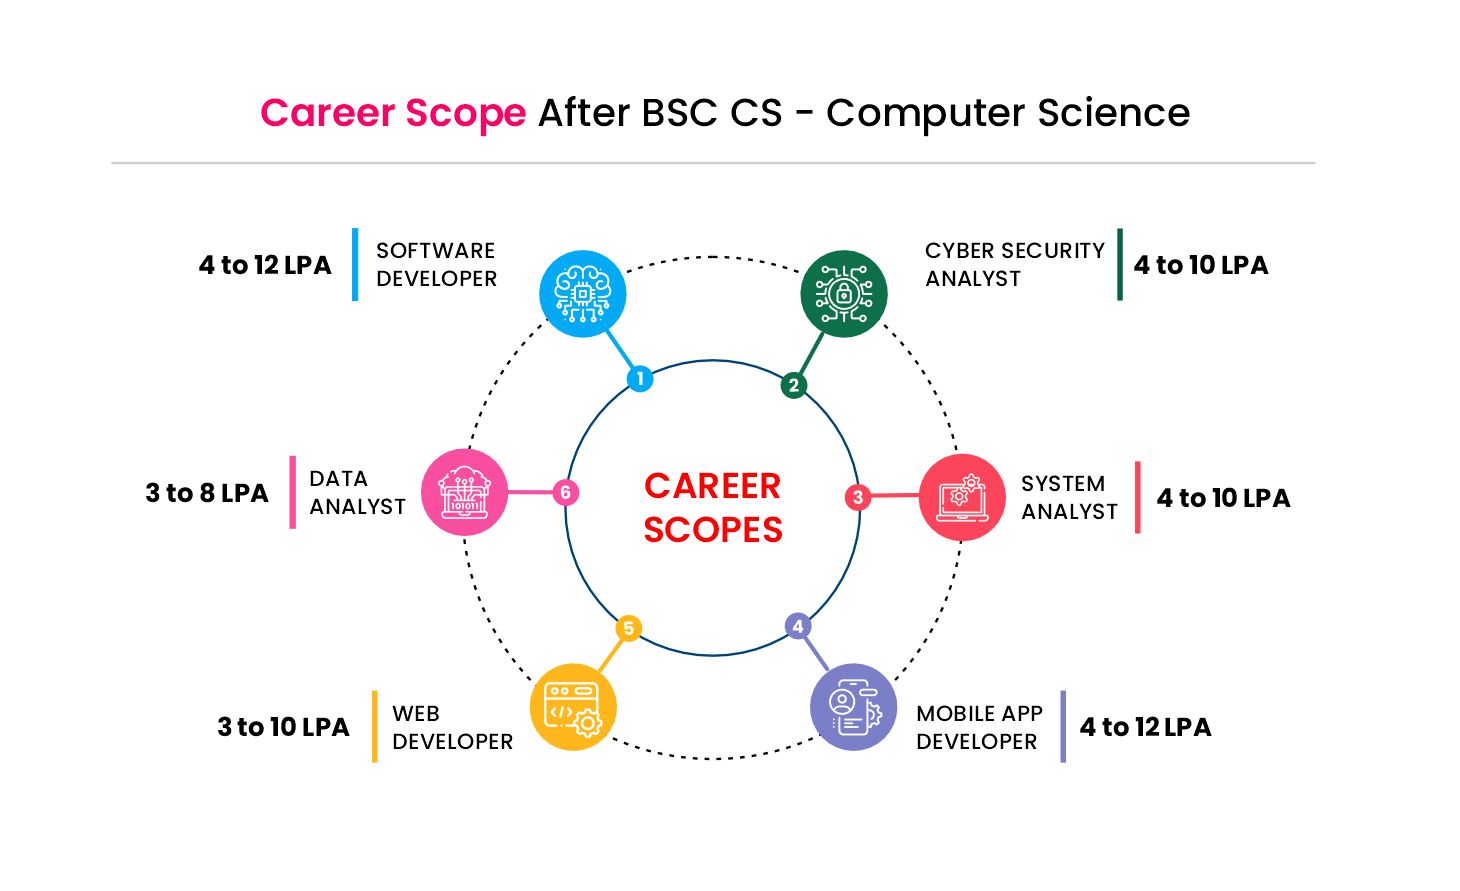 BSc Computer Science career scope